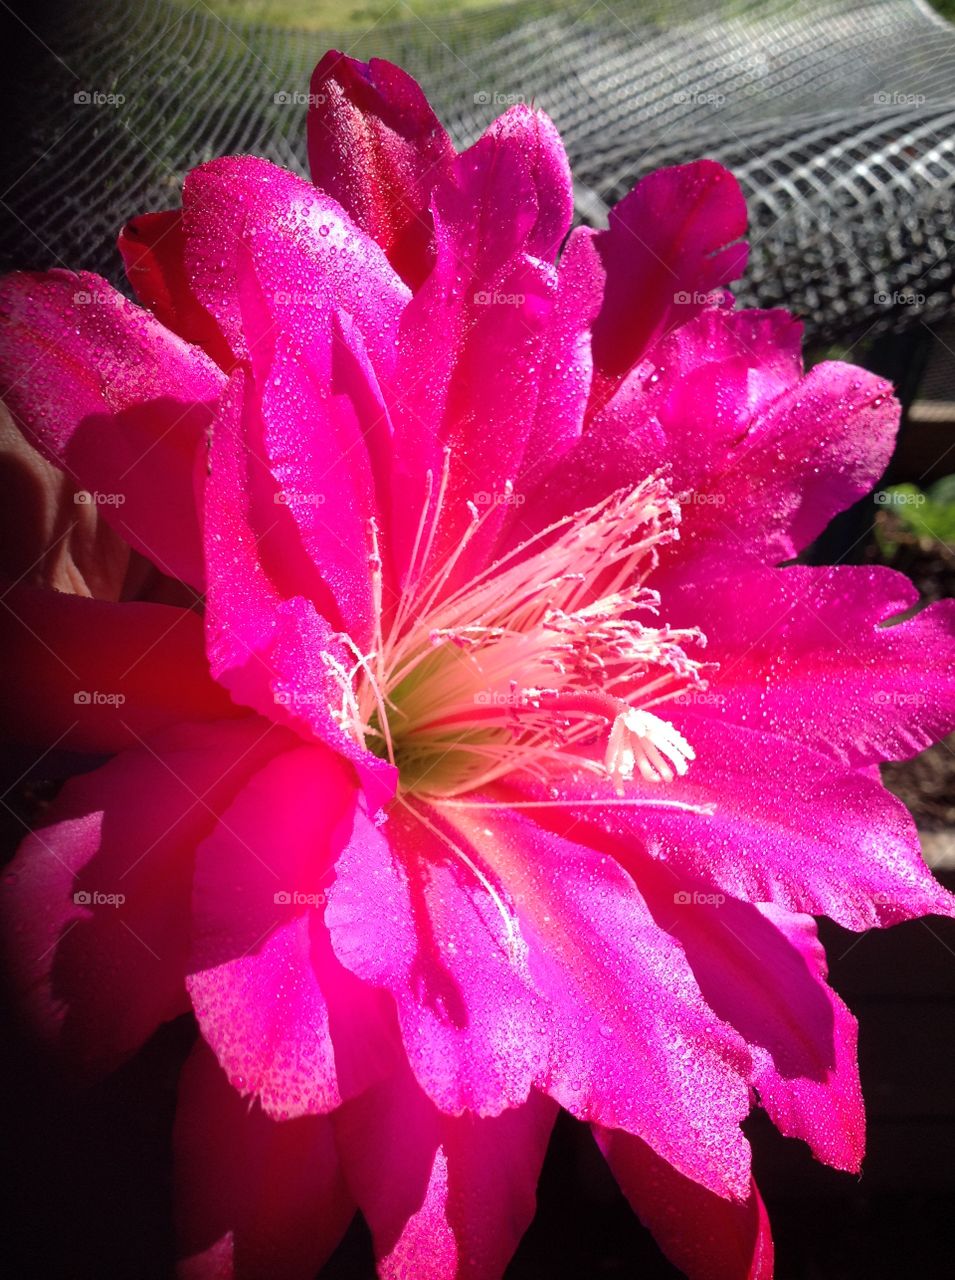 Rare pink cactus flower